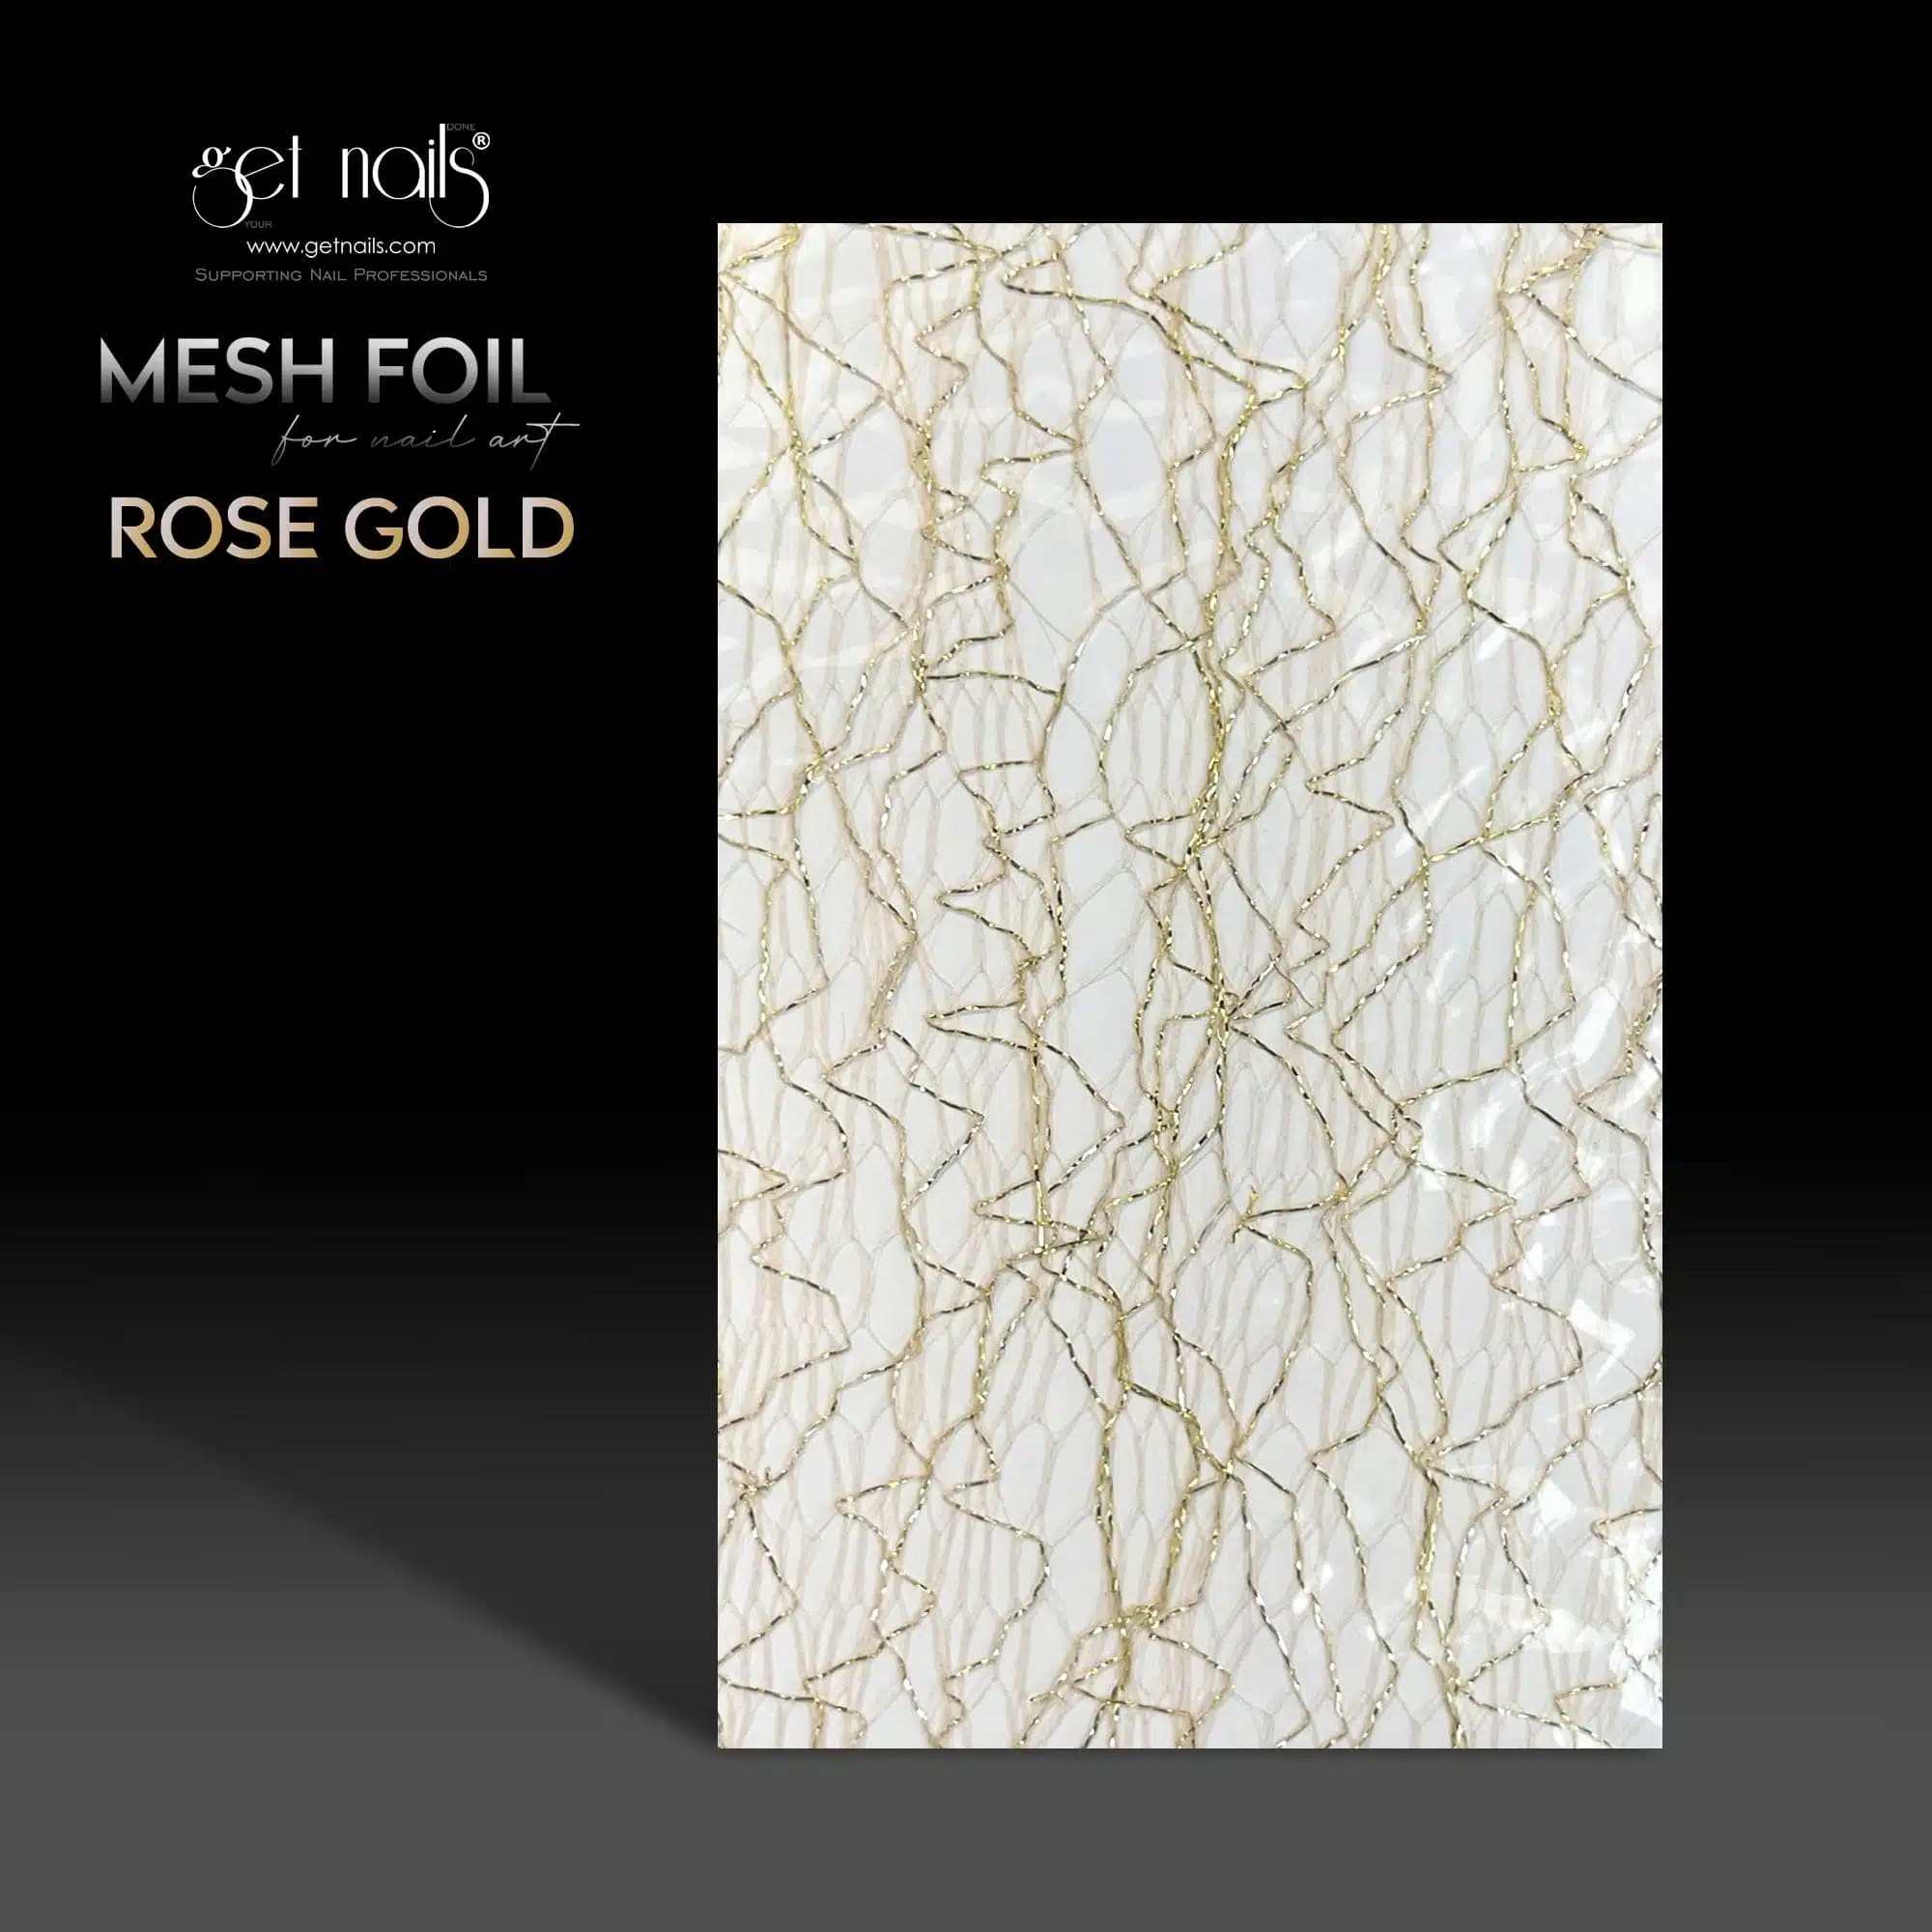 Get Nails Austria - Mesh Folie Rose Gold